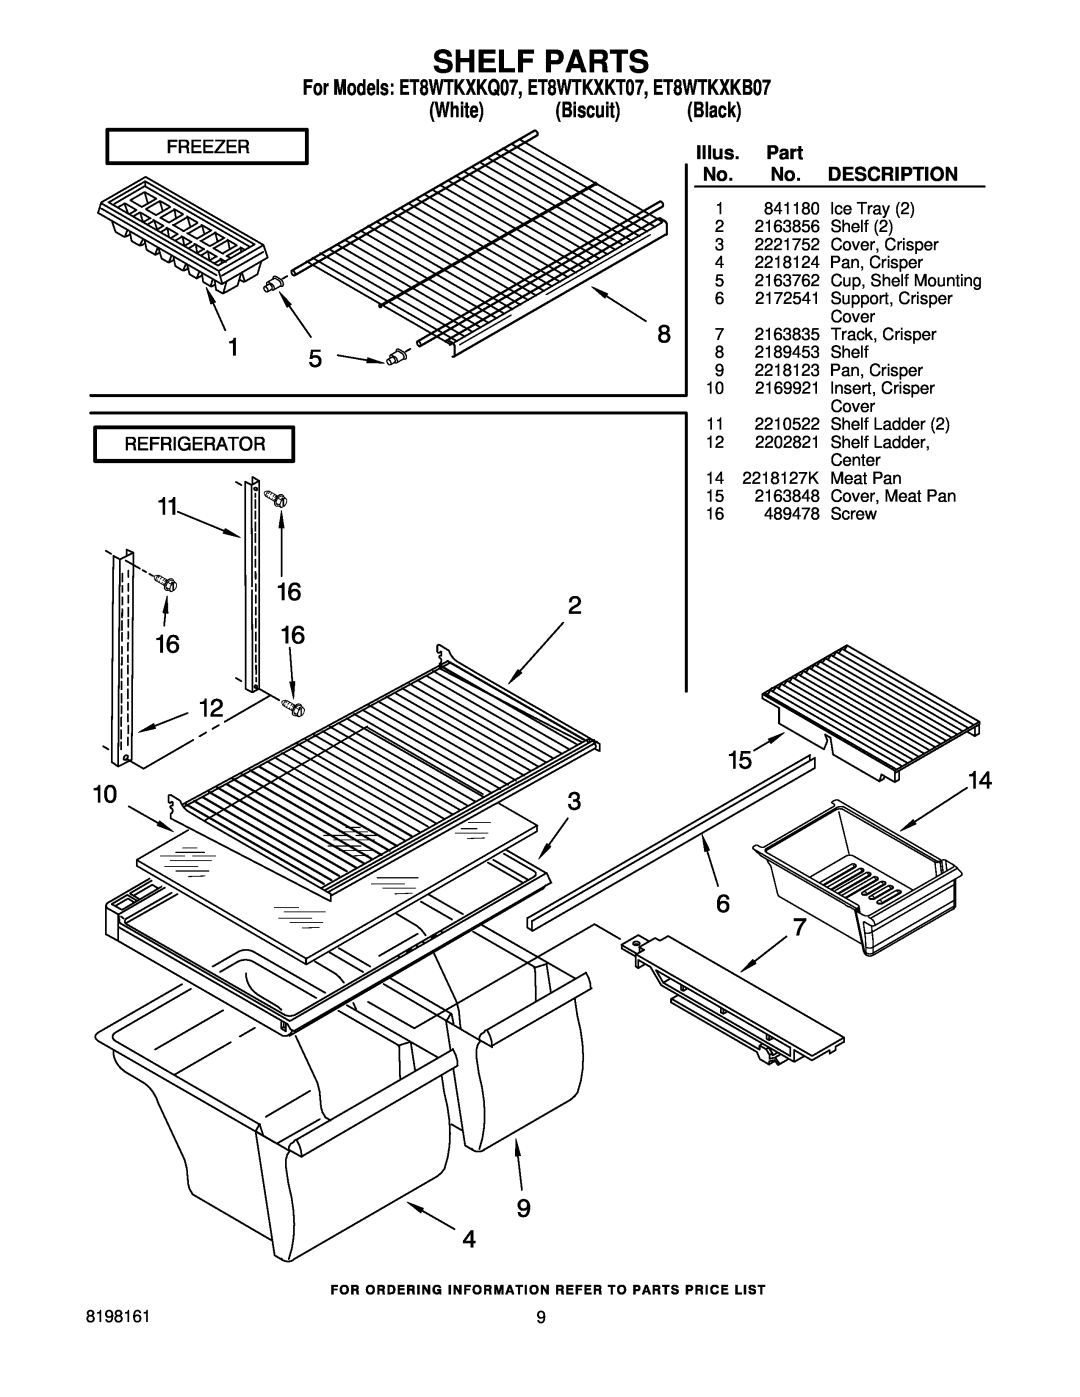 Whirlpool manual Shelf Parts, For Models ET8WTKXKQ07, ET8WTKXKT07, ET8WTKXKB07 White Biscuit Black 